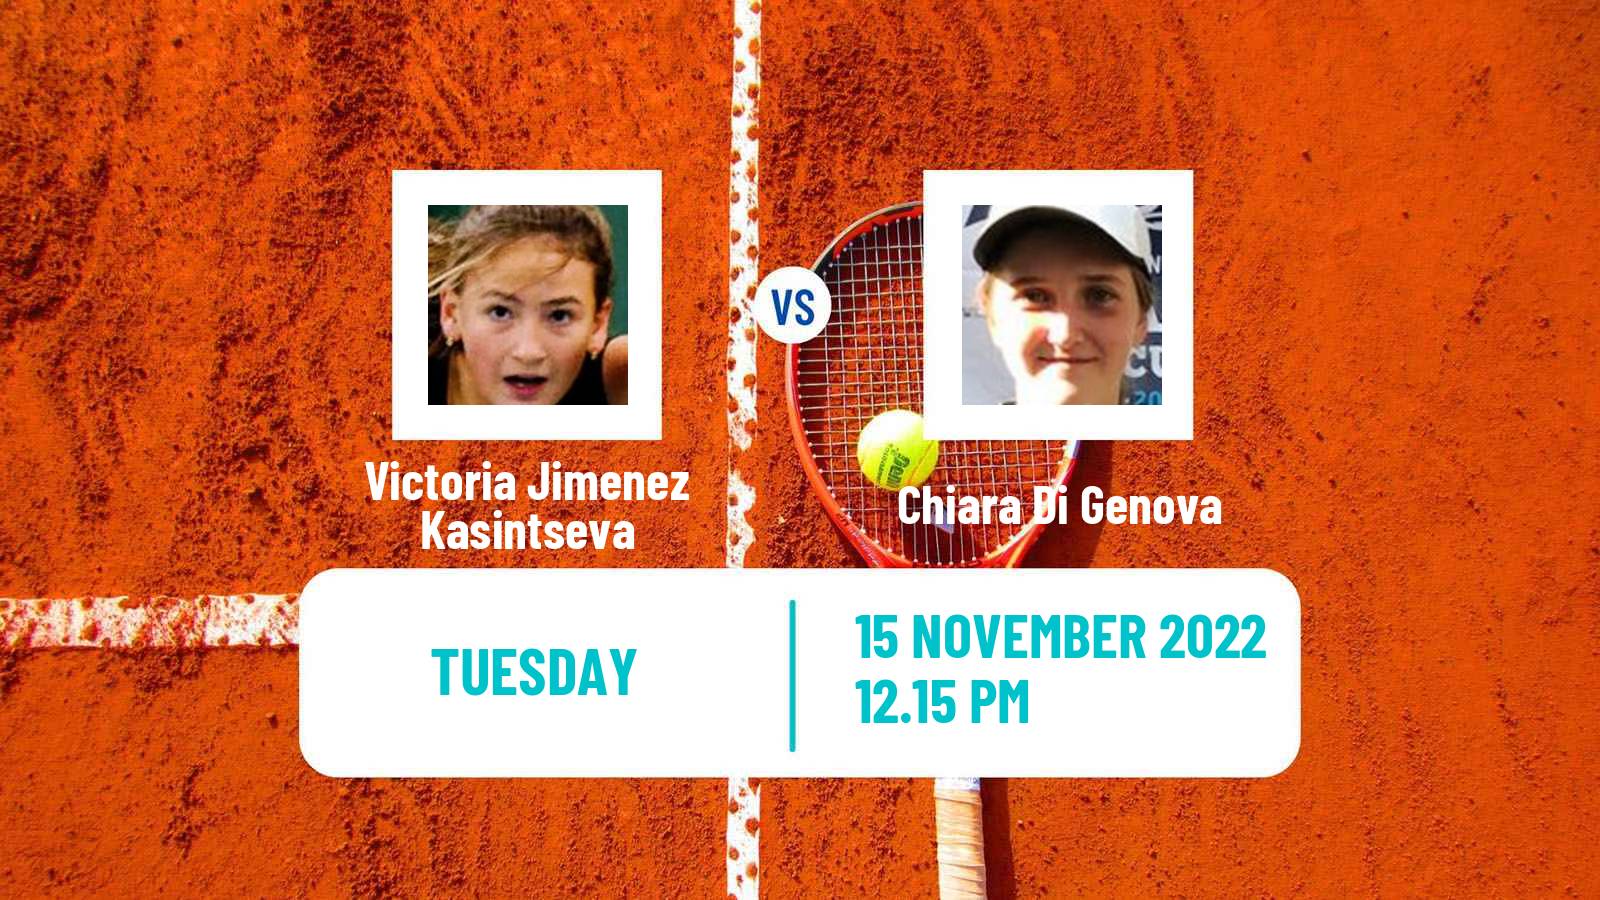 Tennis ATP Challenger Victoria Jimenez Kasintseva - Chiara Di Genova